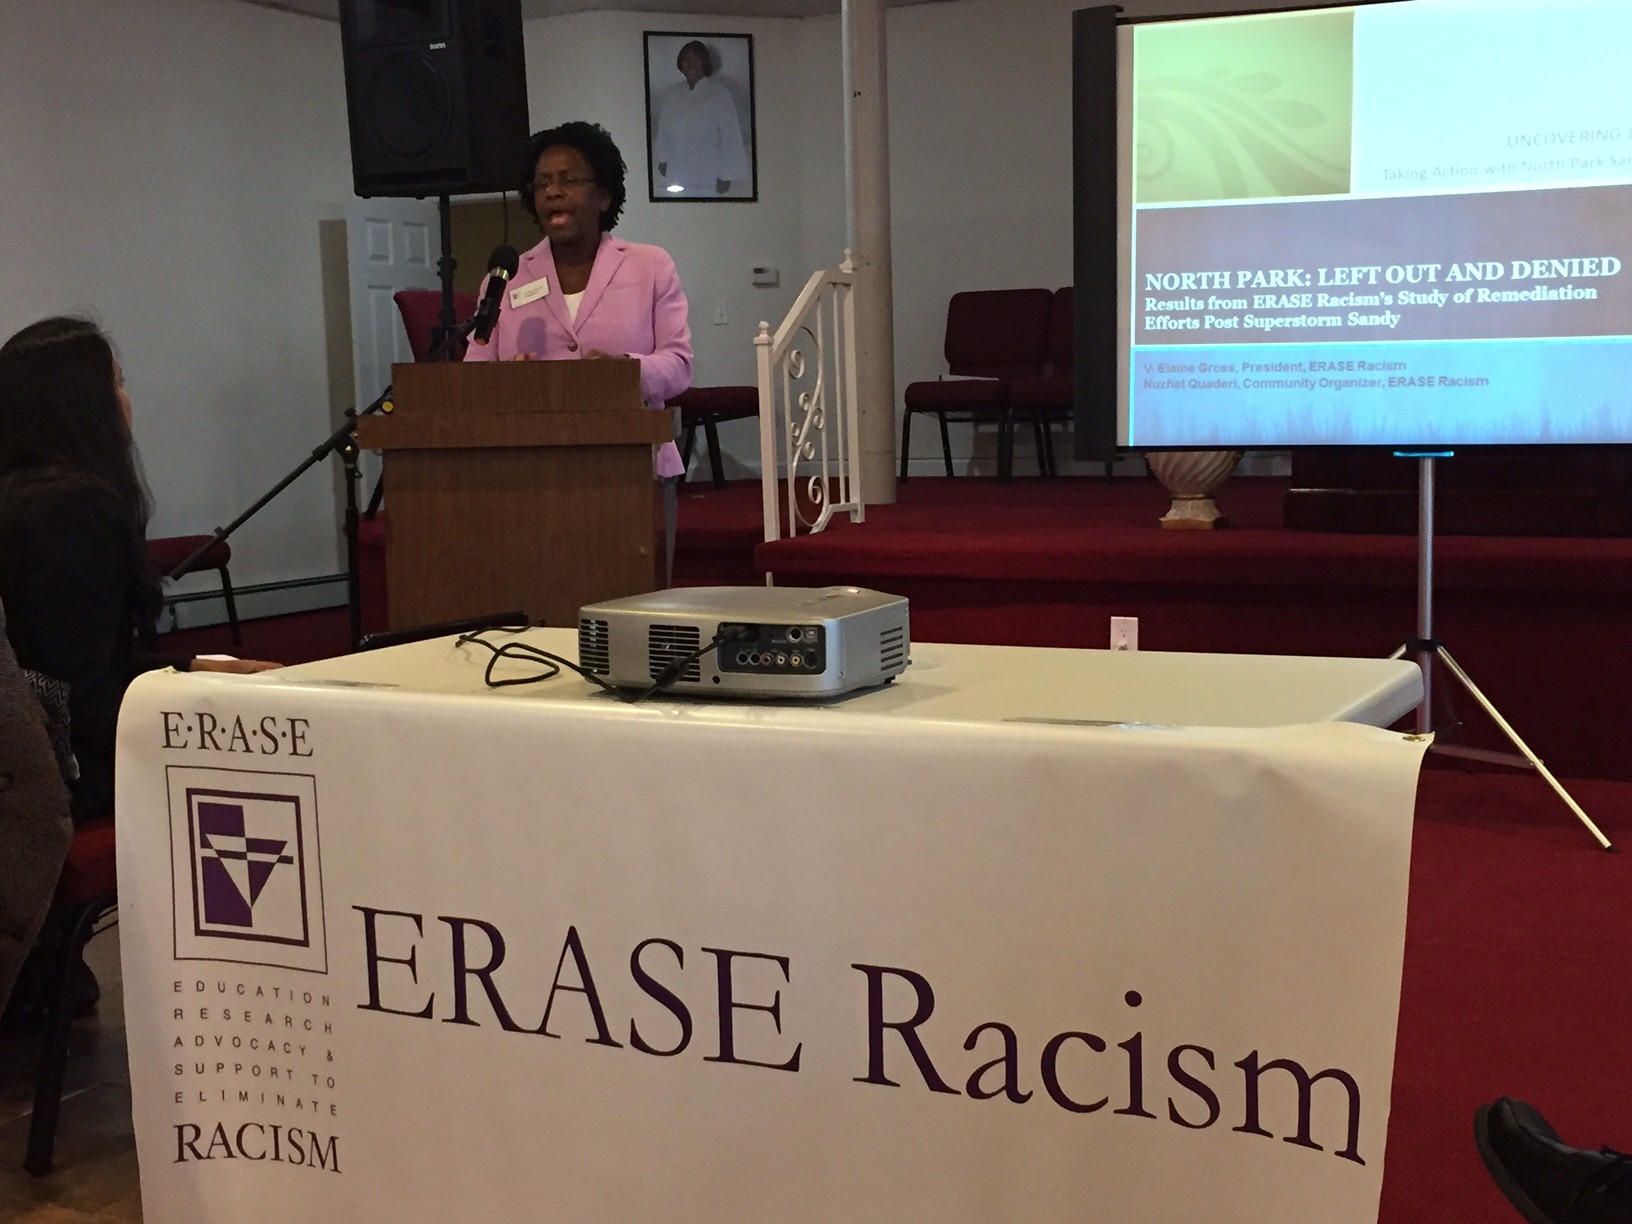 Elaine Gross, president of ERASE Racism, presented the study’s findings at last week’s meeting.